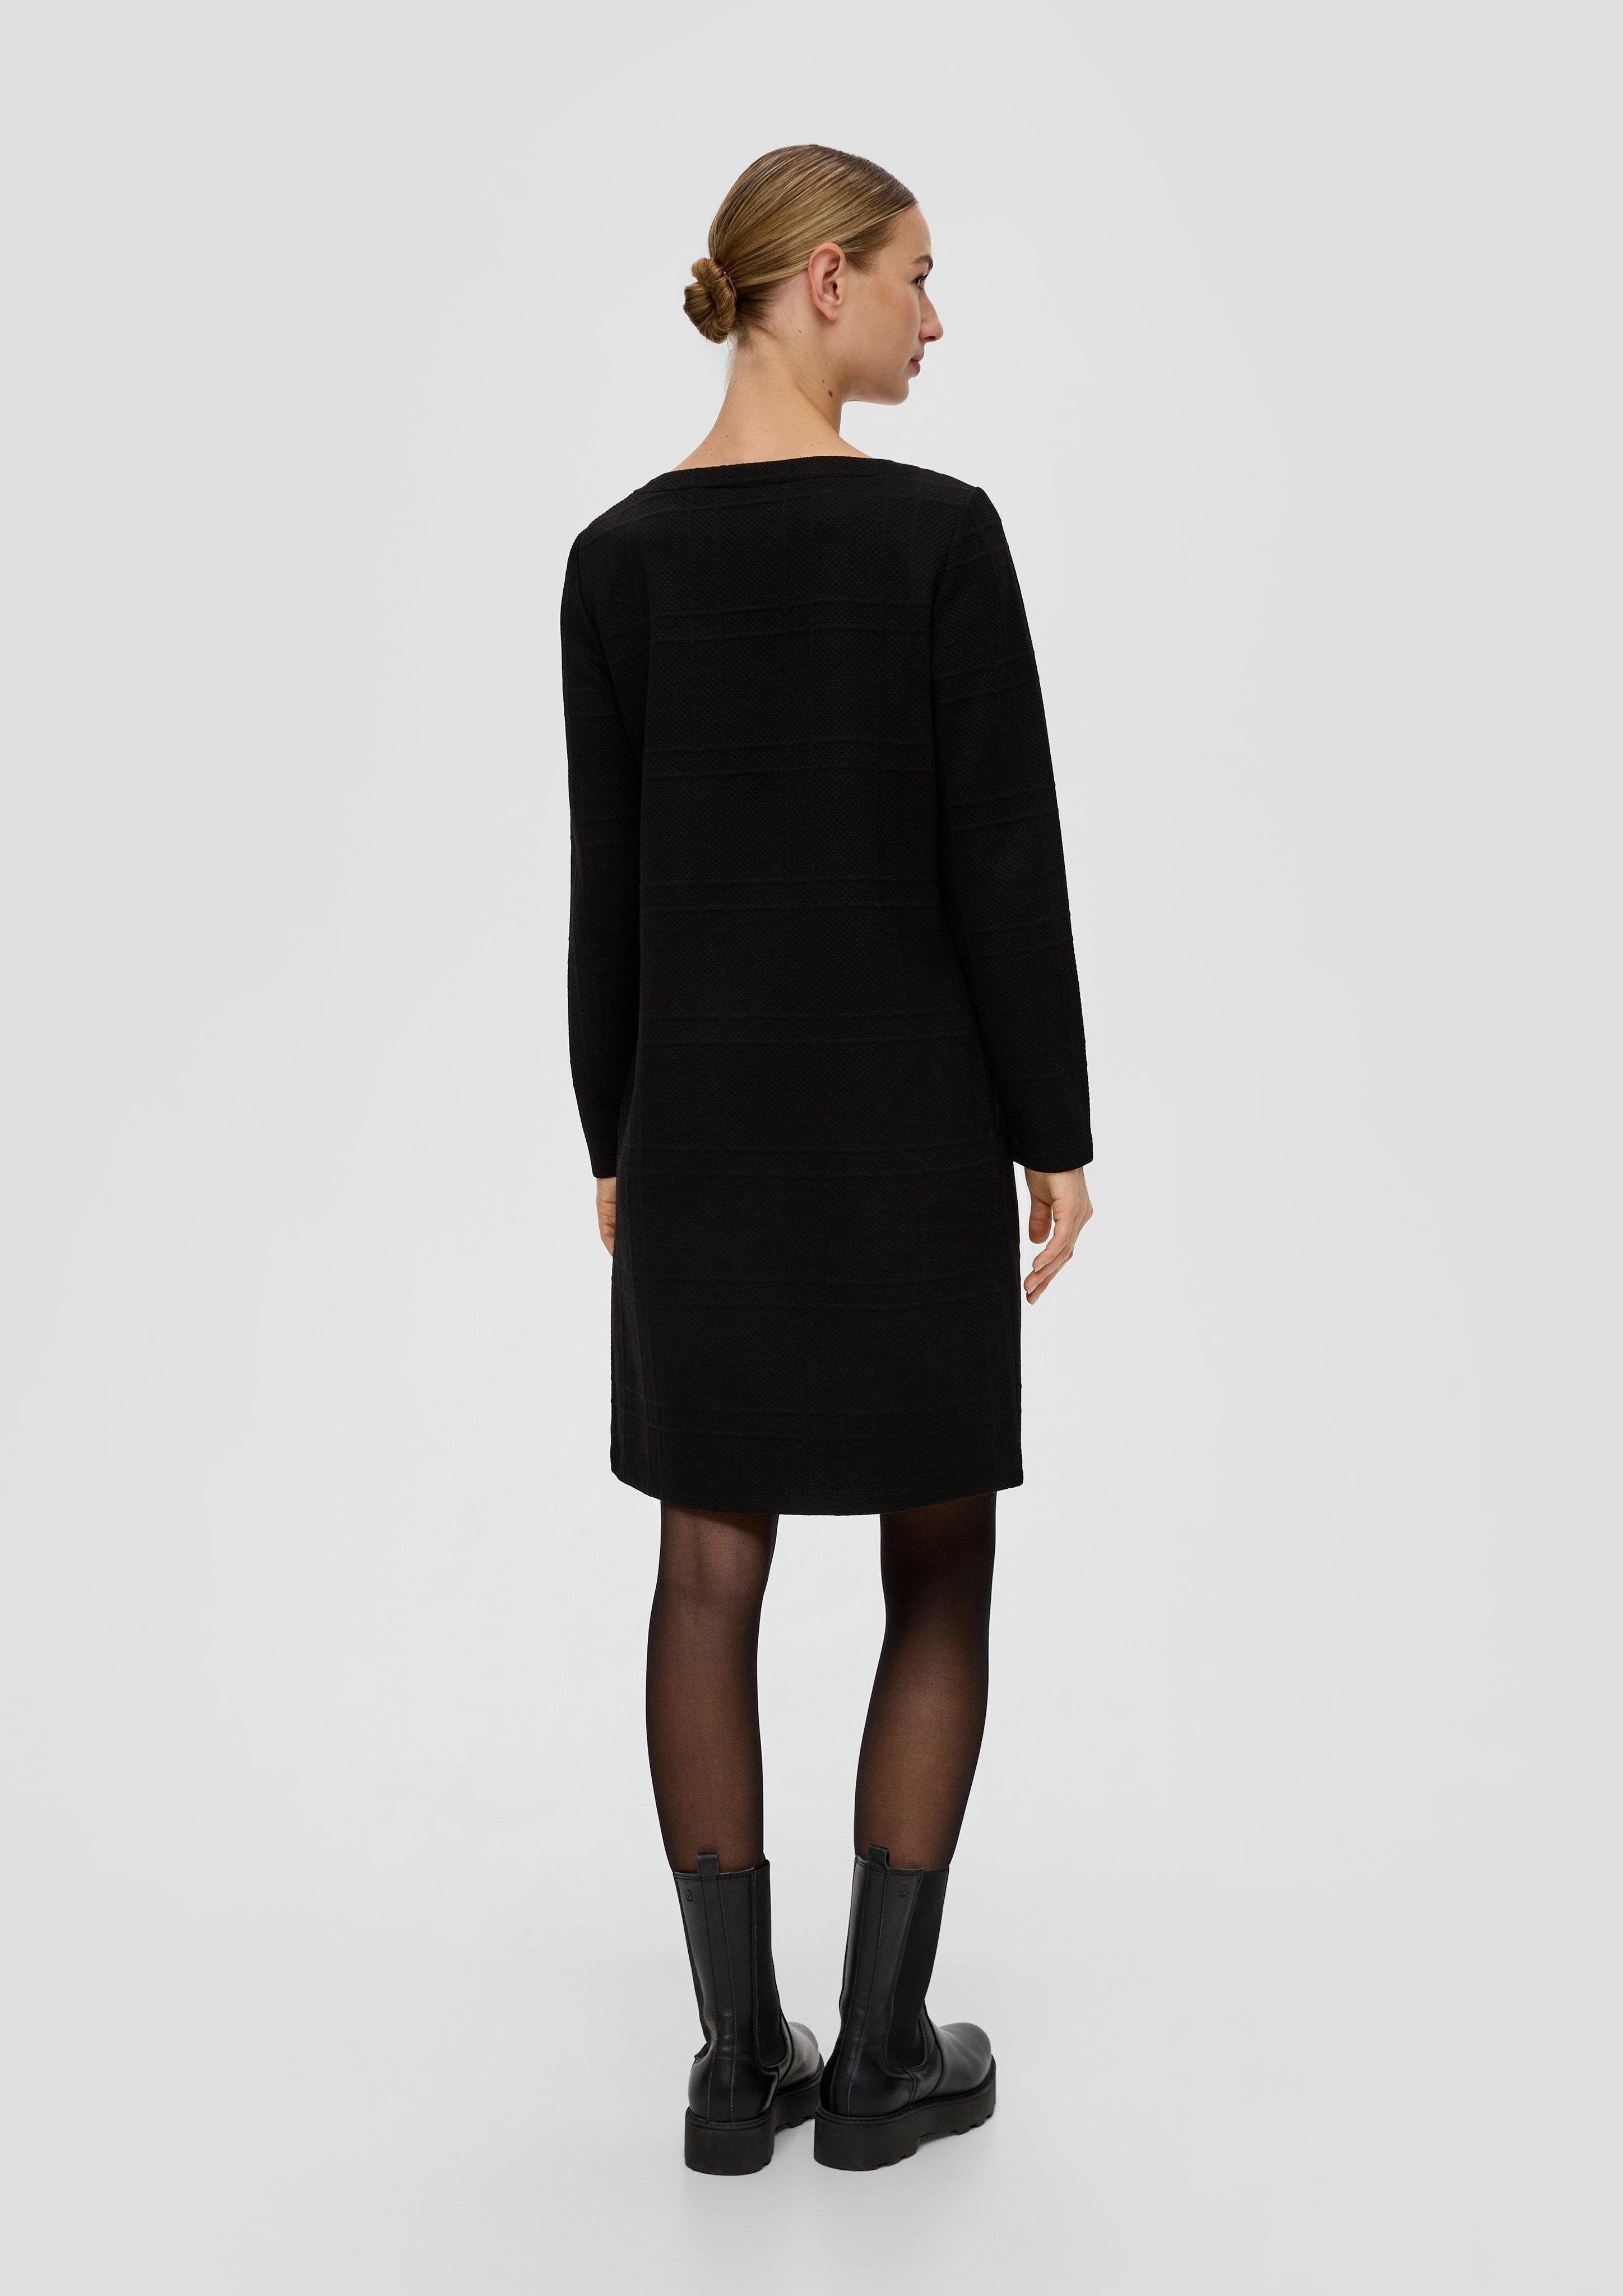 Viskose Jacquard-Kleid schwarz Minikleid mit s.Oliver